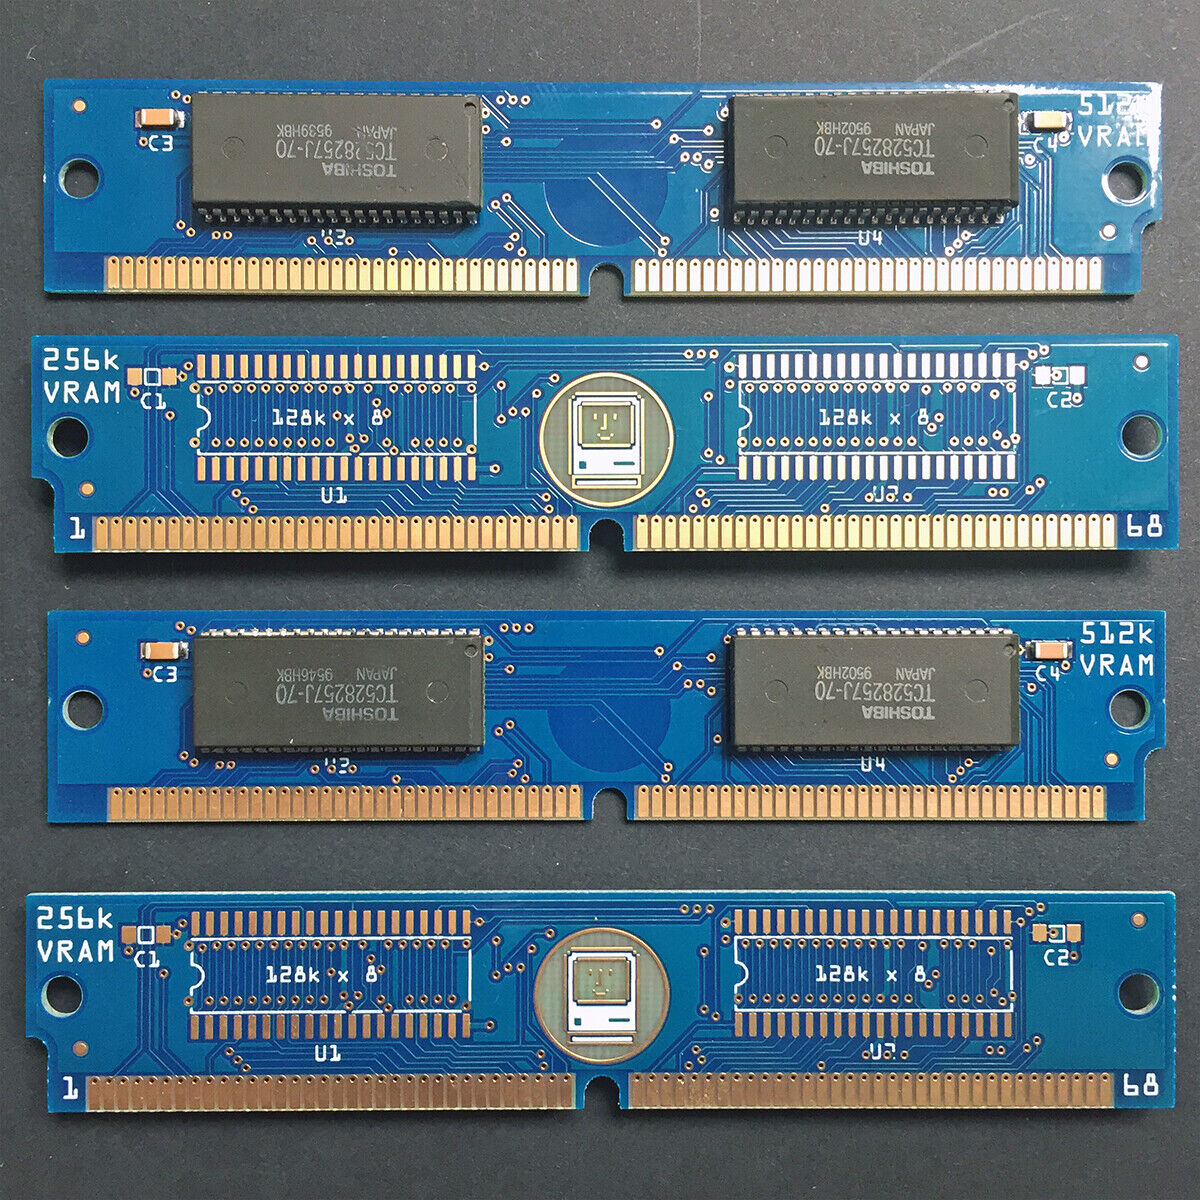 1pcs new 68pin SIMM 512k 70ns low latency VRAM memory Apple Macintosh computer